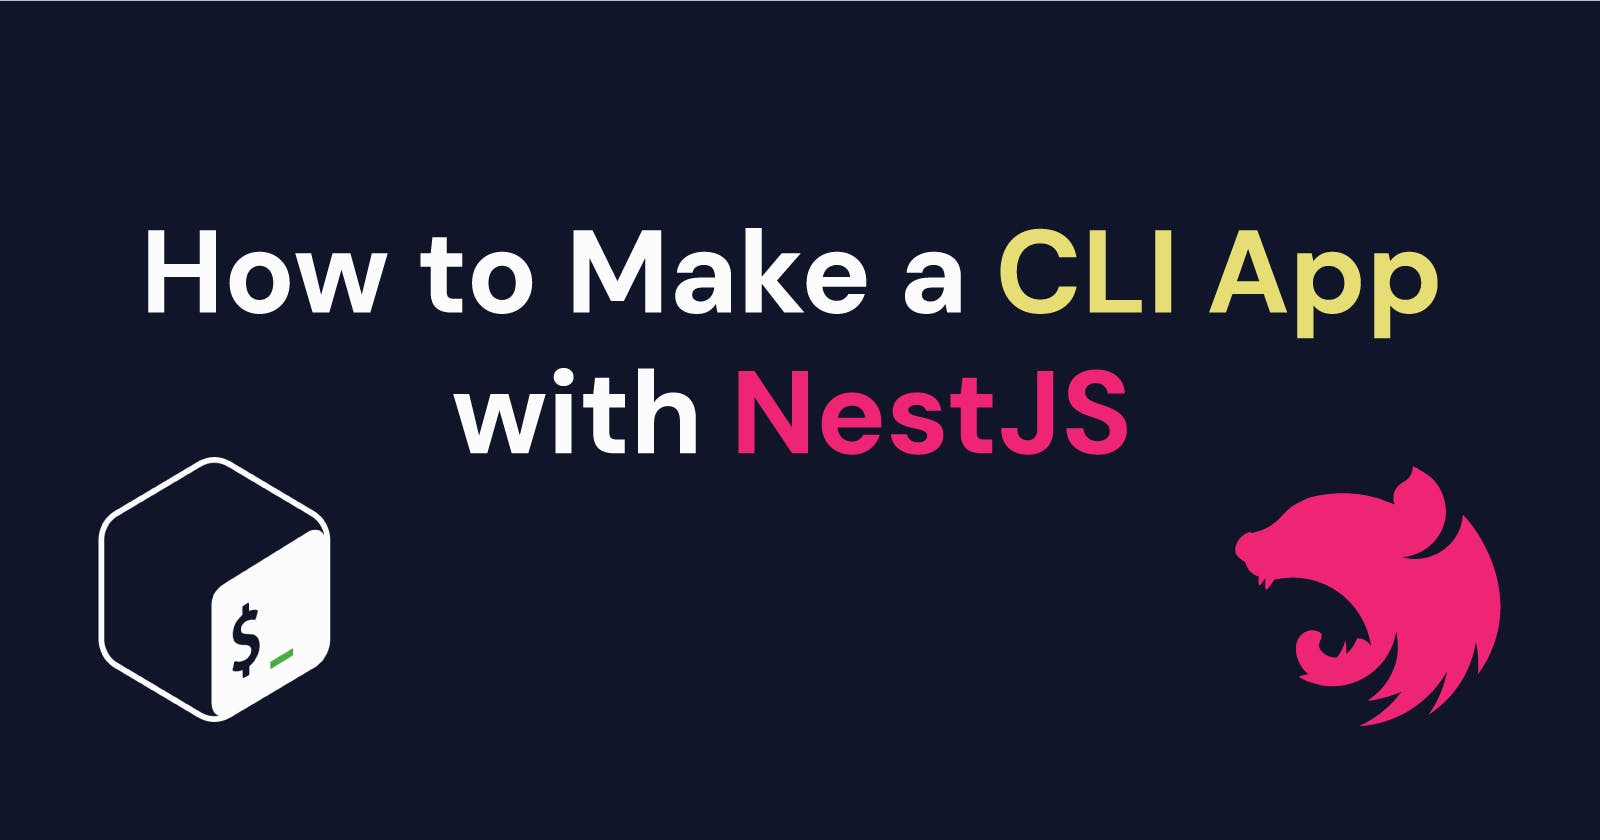 How to Make a CLI App with NestJS: Step-by-Step